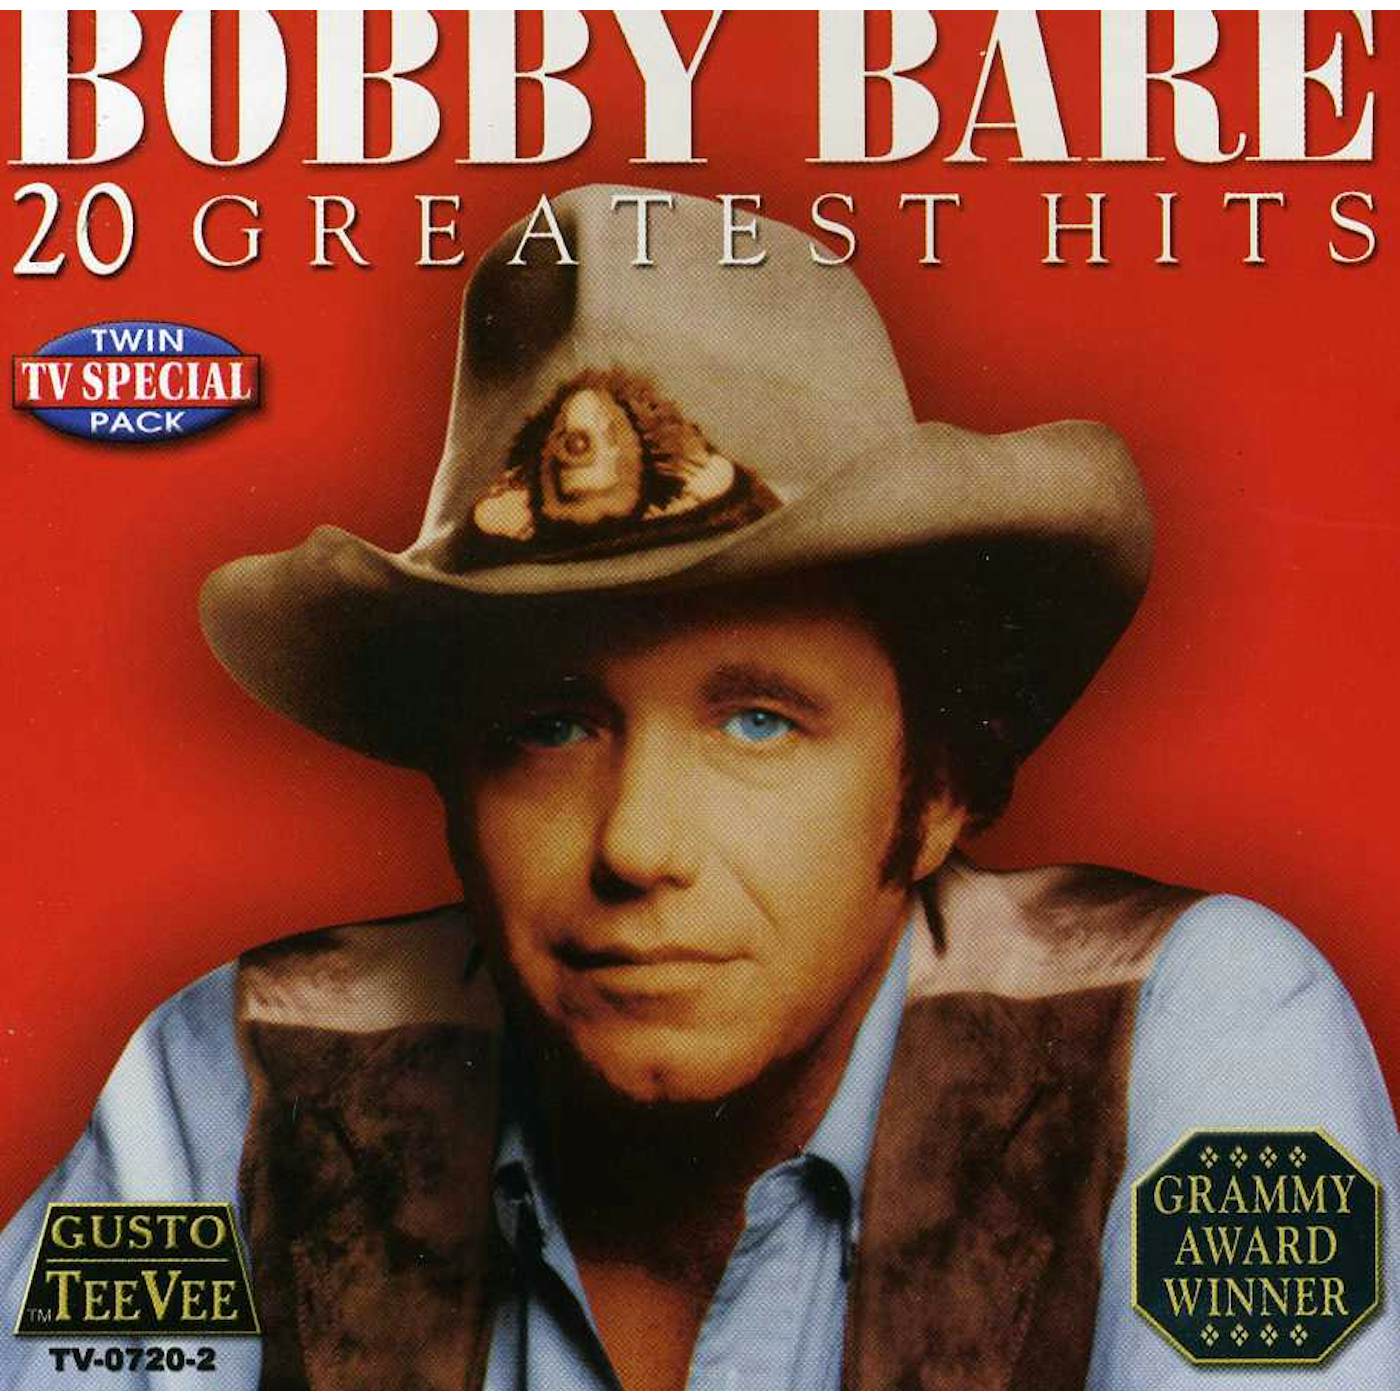 Bobby Bare 20 GREATEST HITS CD